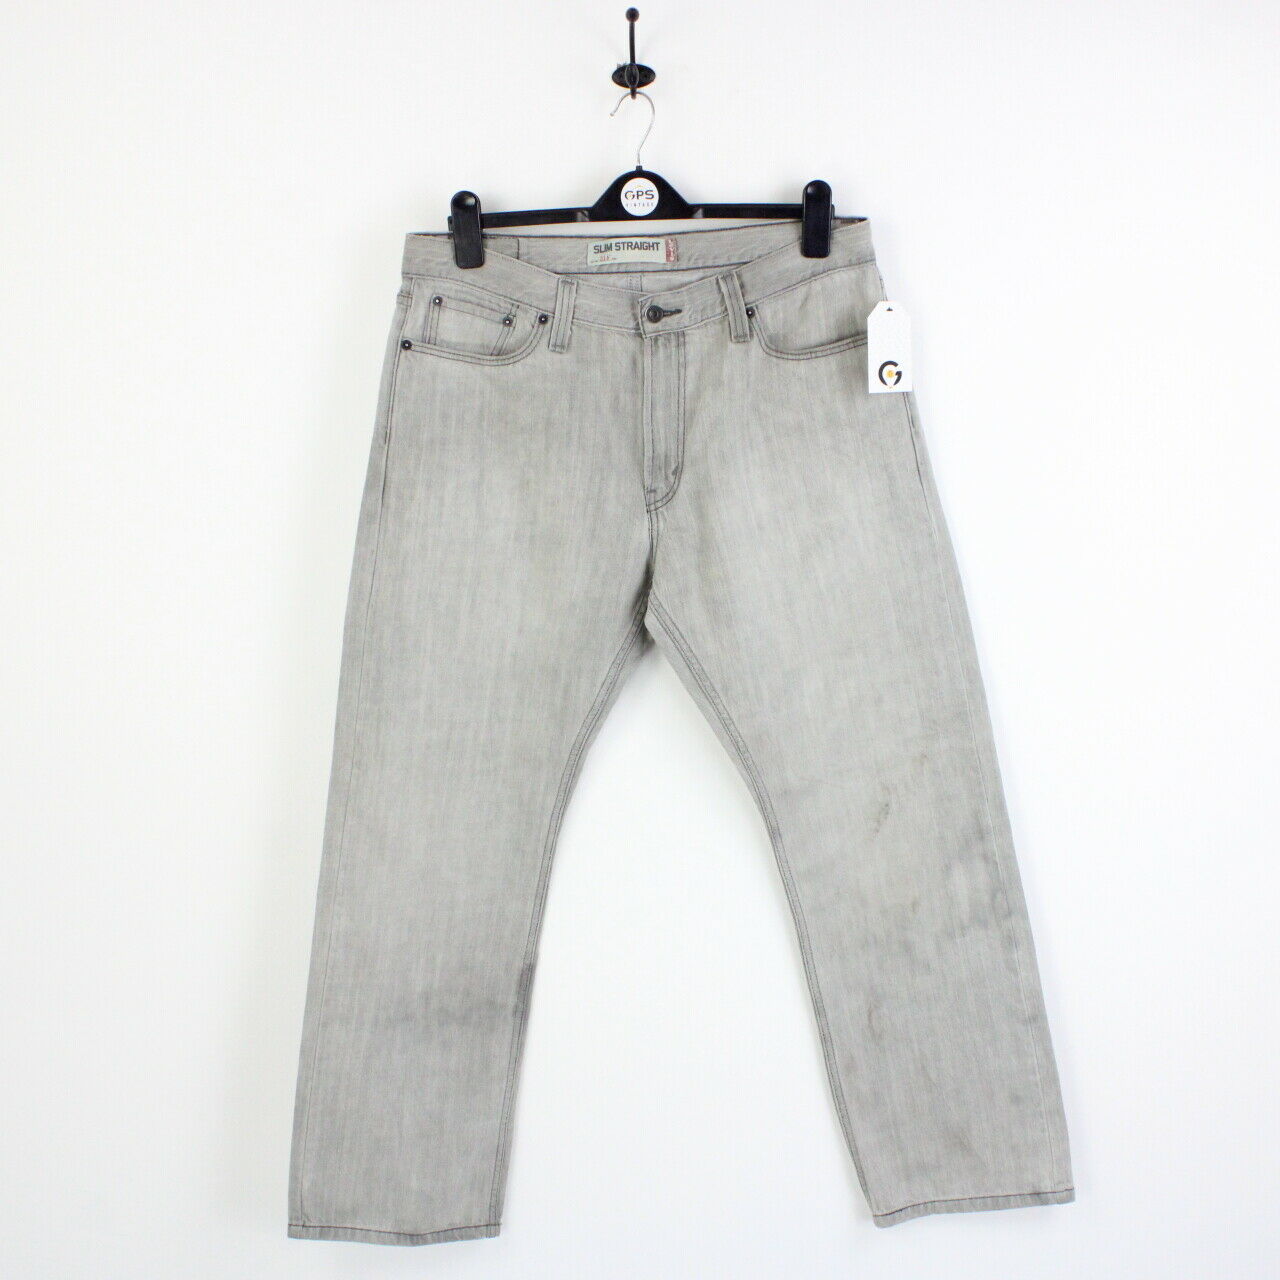 LEVIS 514 Jeans Grey | W36 L30